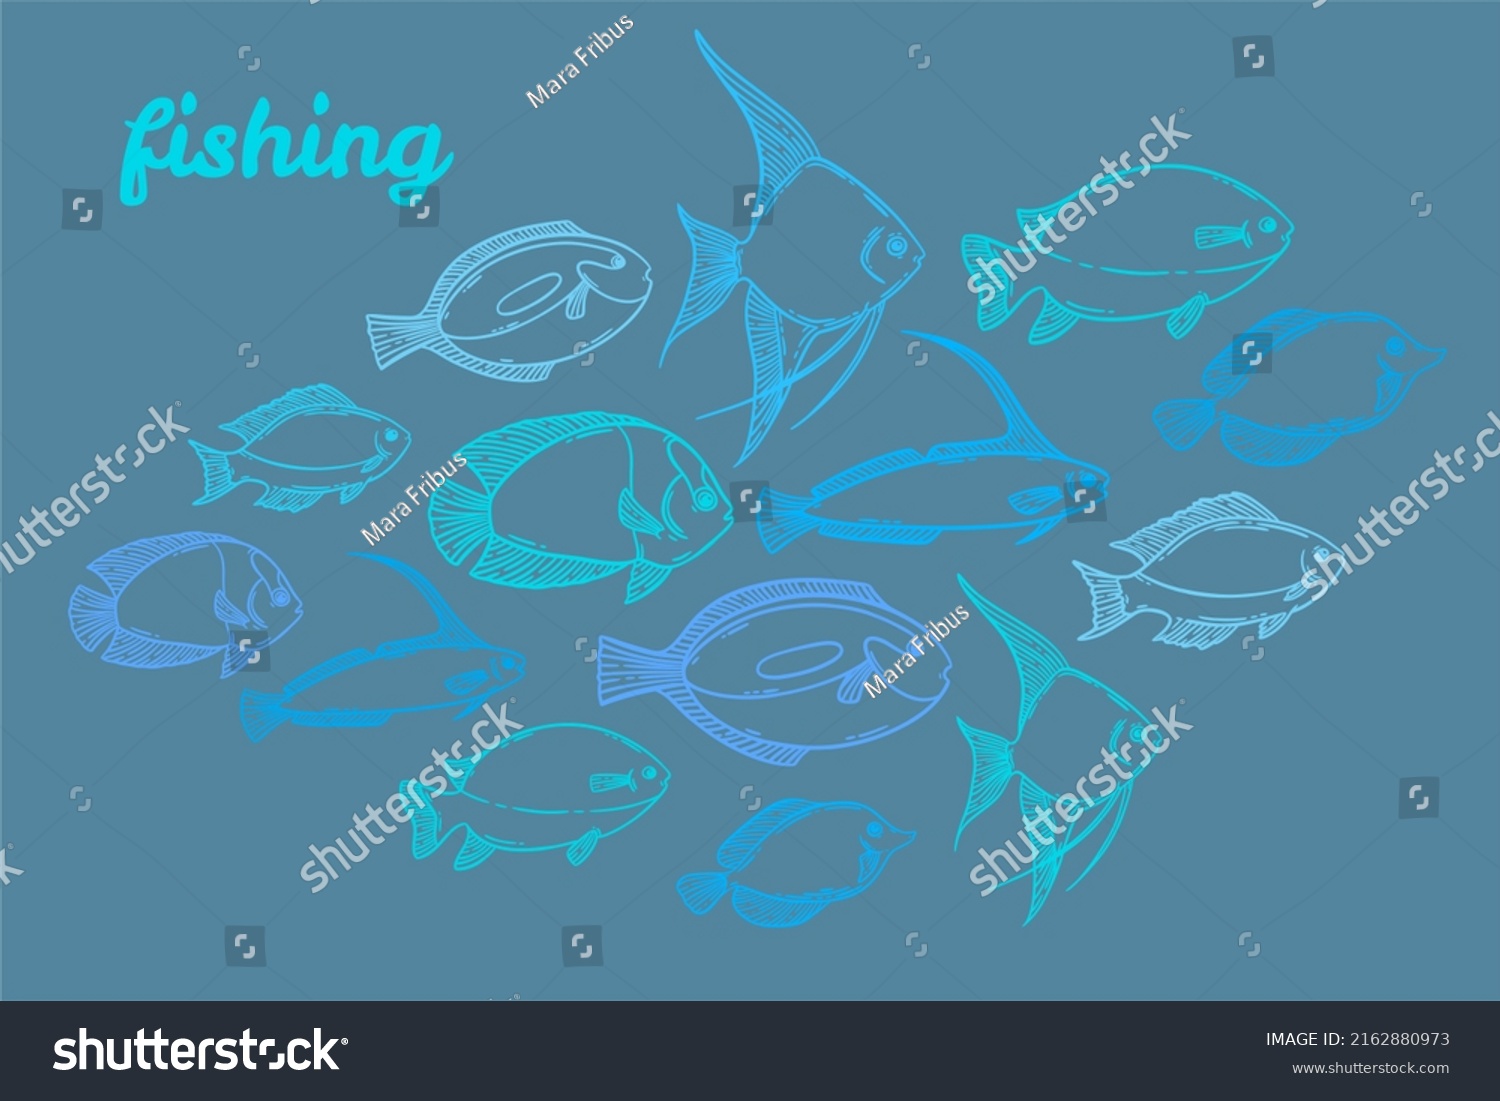 Stock Photo School Of Fish Sketch Set Hand Drawn Fishing Illustration Restaurant Sea Food Menu Design 2162880973 